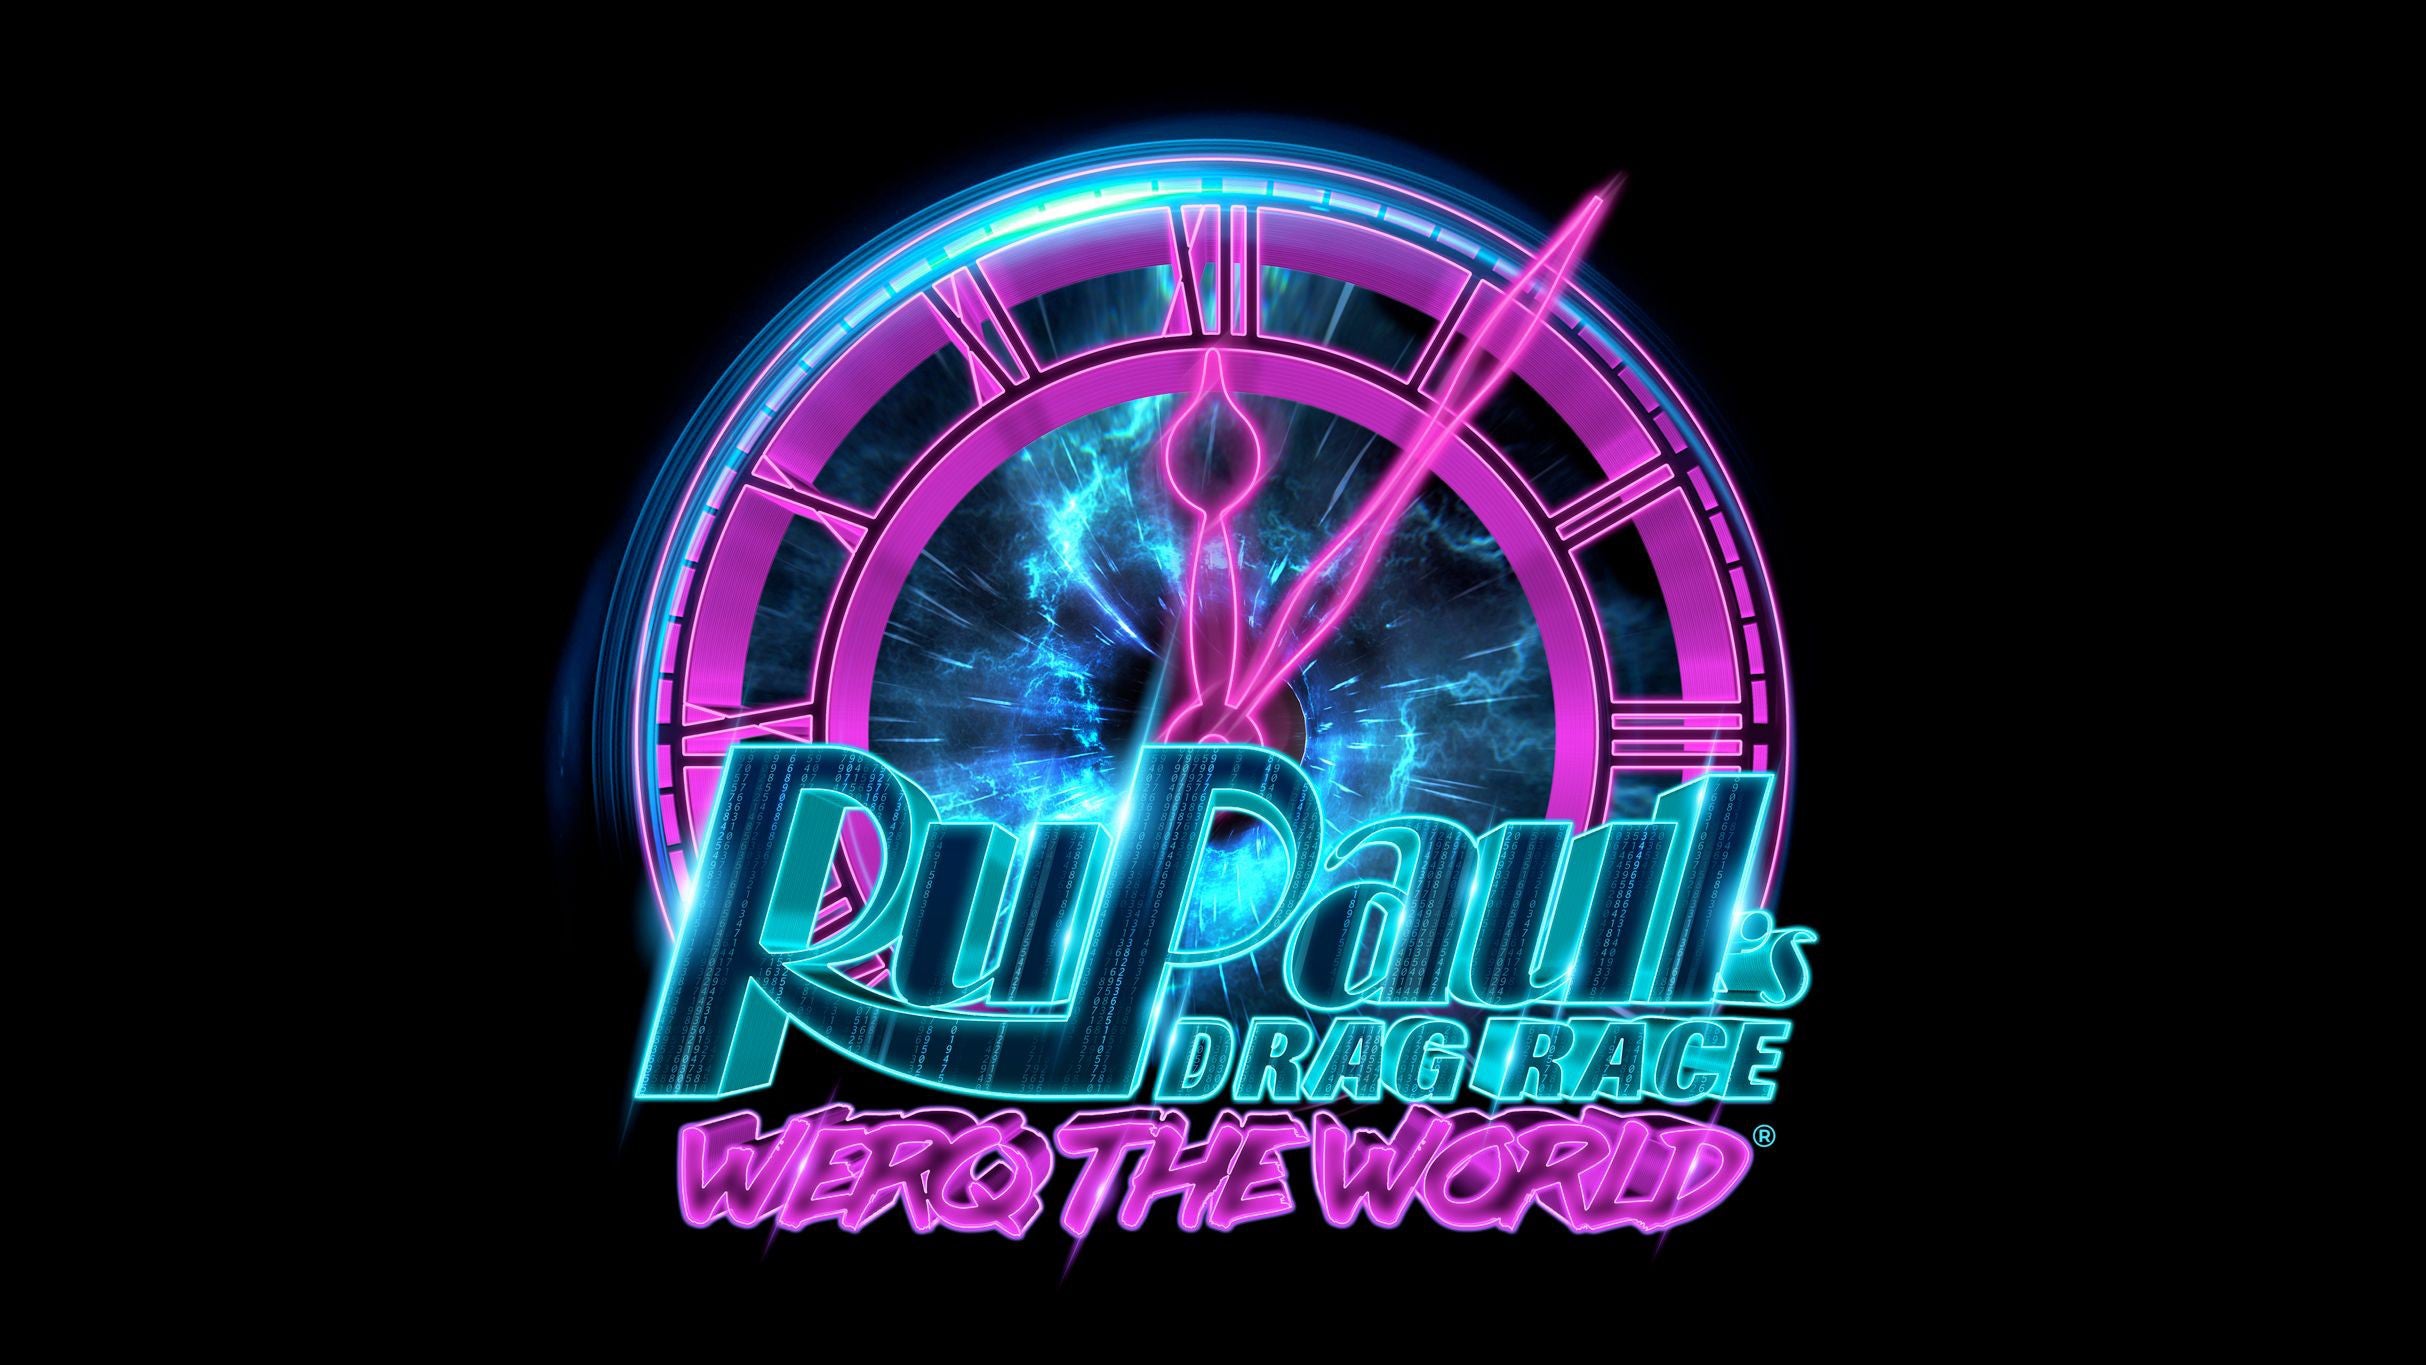 RuPaul's Drag Race Werk The World Tour 2023 presale passcode for legit tickets in Toronto